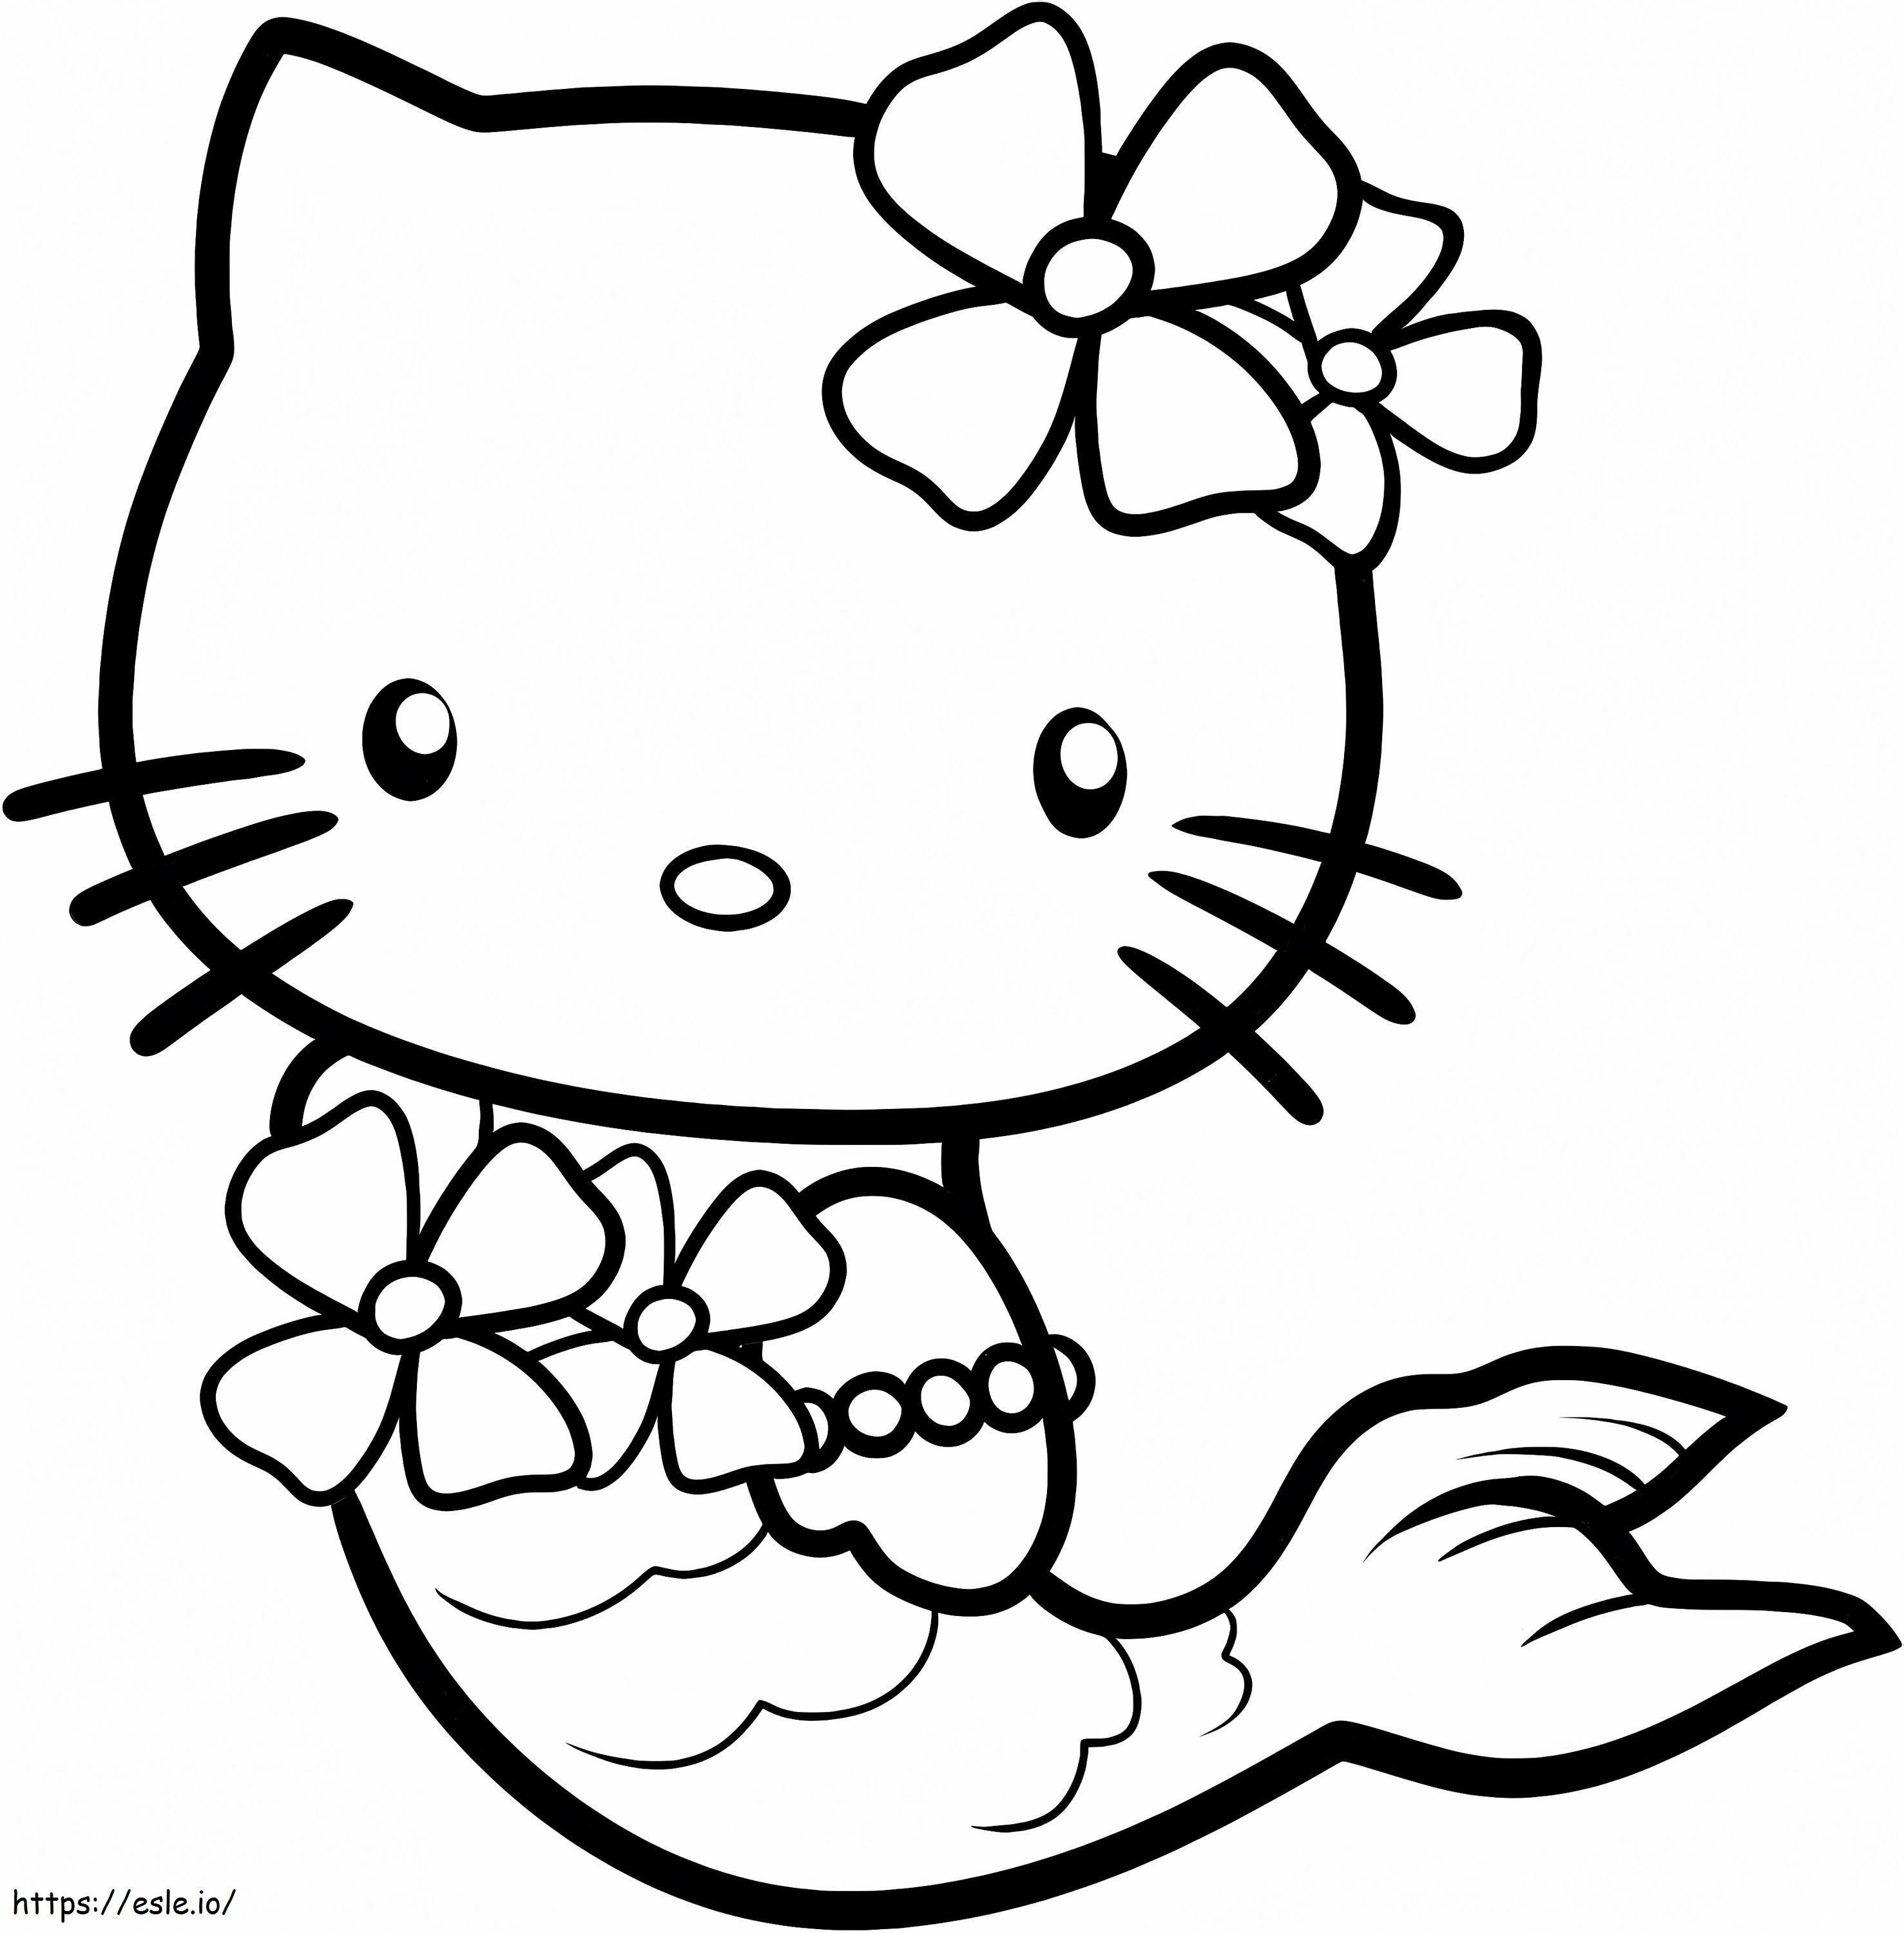 1539941740 Kitty Hello Kitty Sirene Halaman Anak Gratis Dalam 6 Gambar Karafbistro Princess Tutu Gambar Mewarnai